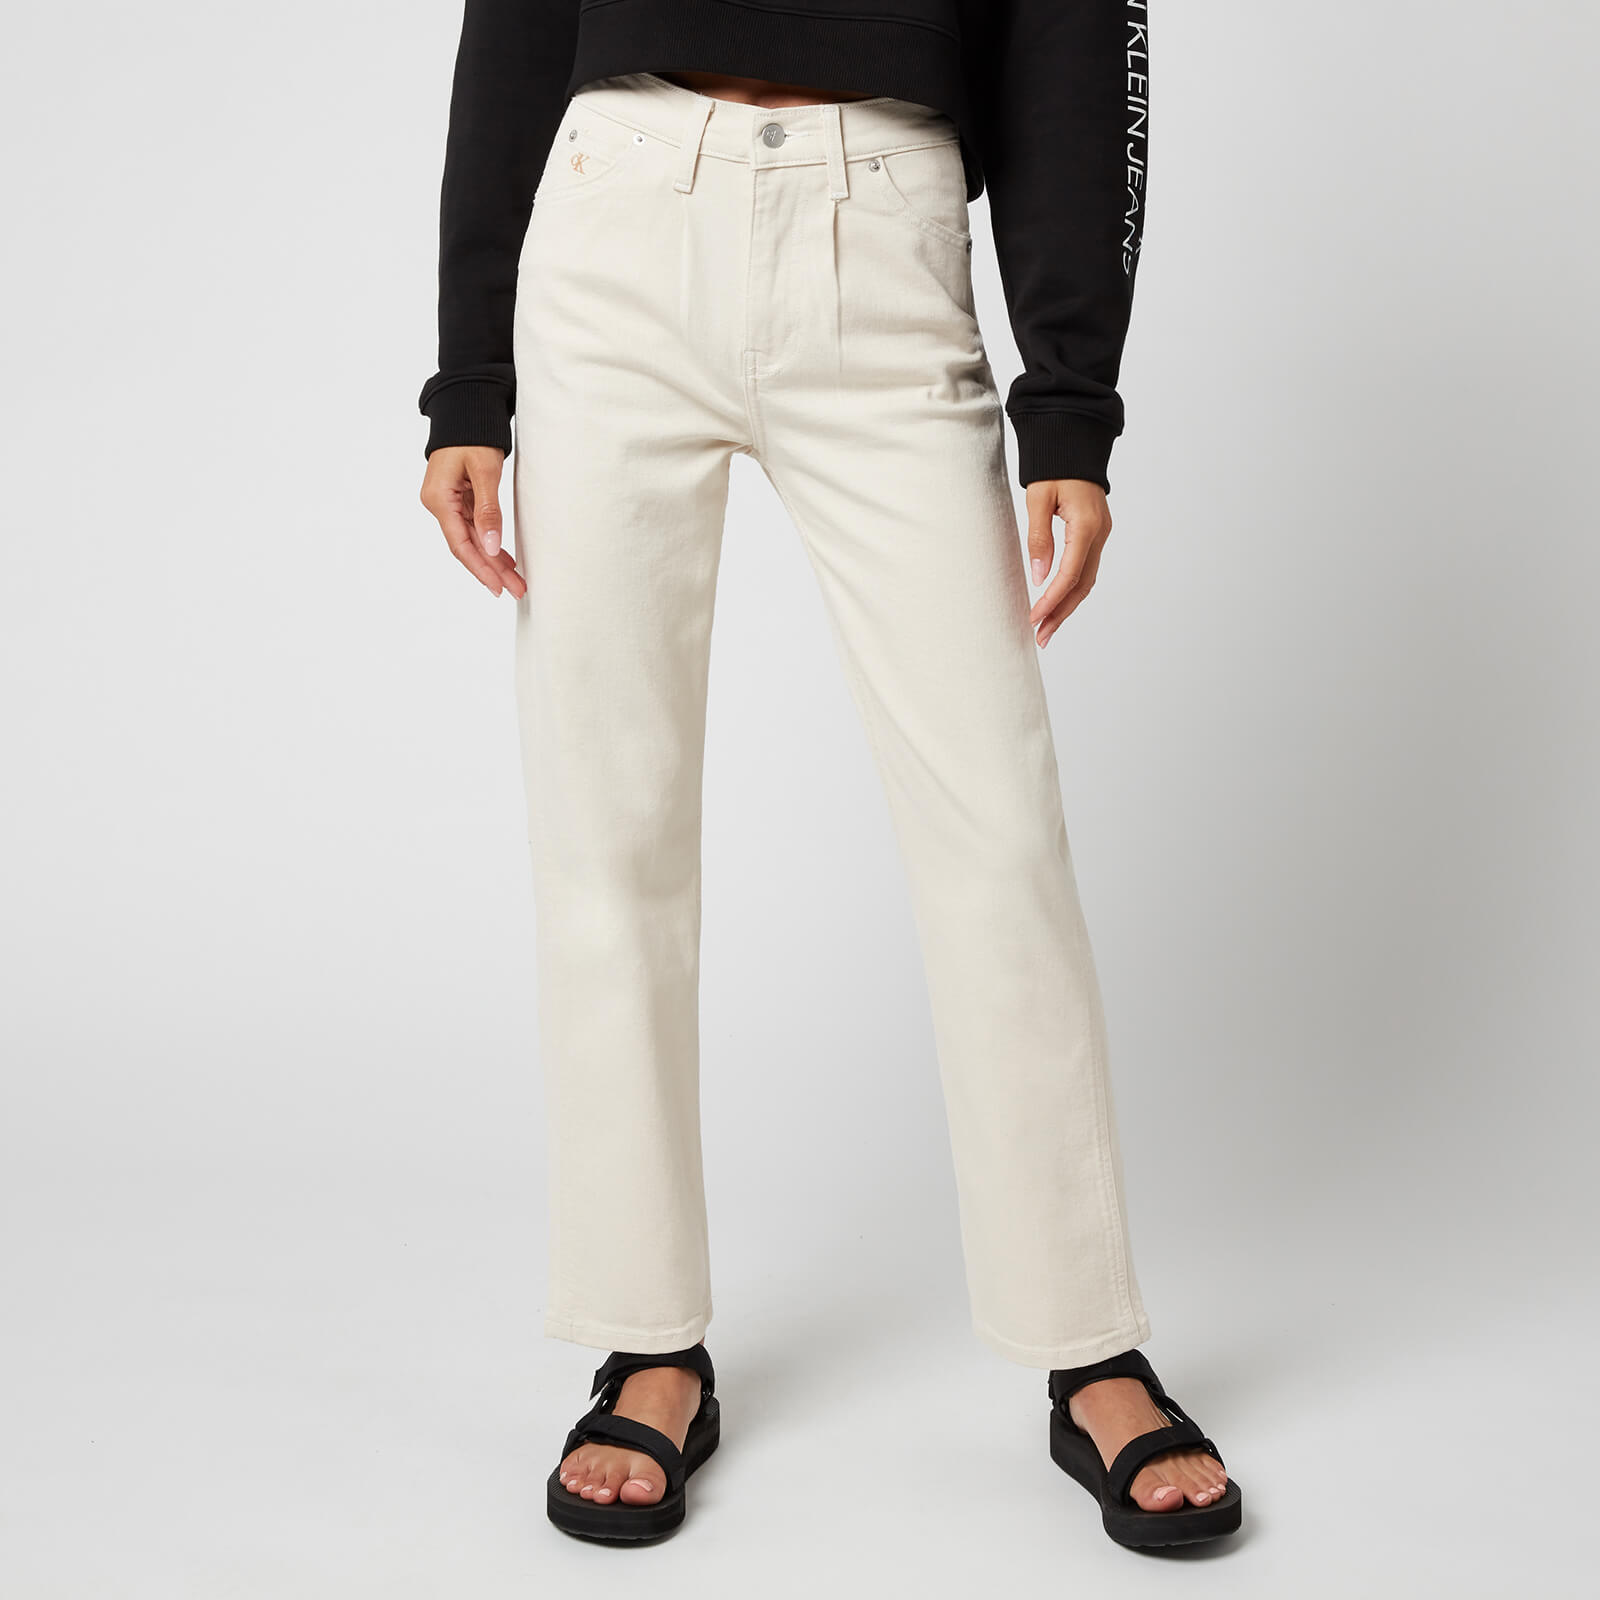 Calvin Klein Jeans Women's High Rise Straight Ankle Jeans - Denim Light - W28/L30